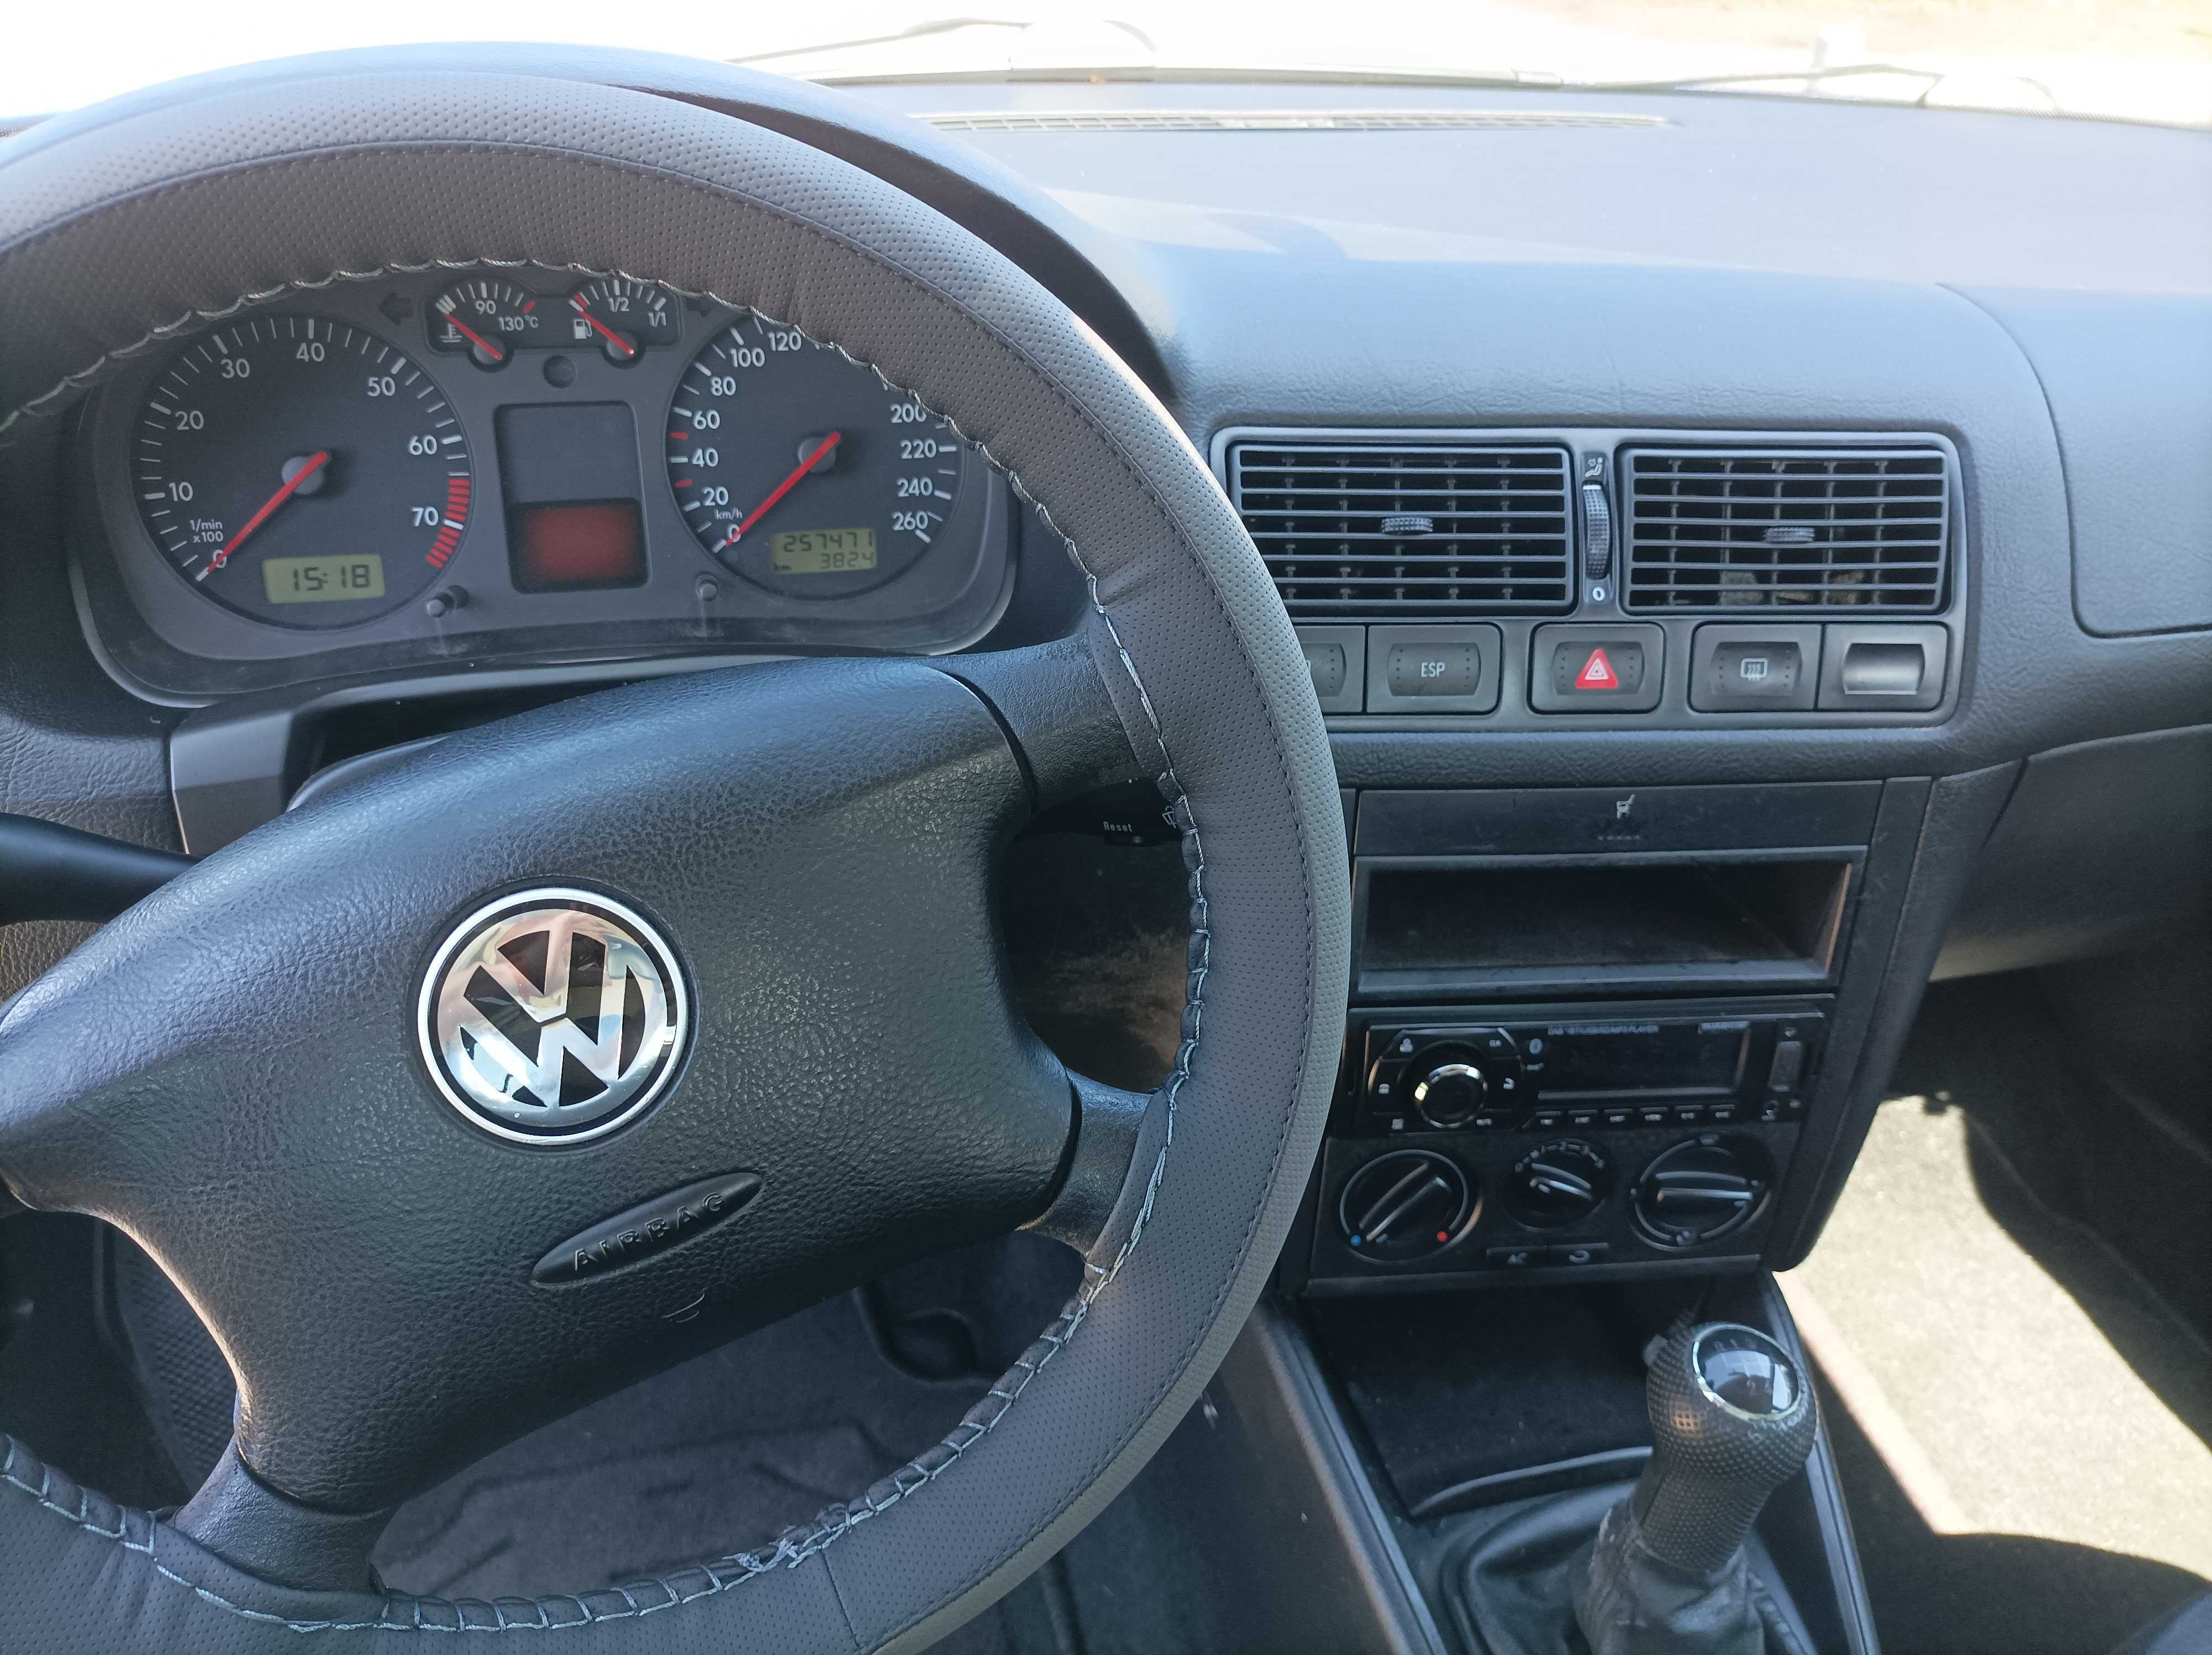 Vând Volkswagen Golf 4 1.6 benzina 2001